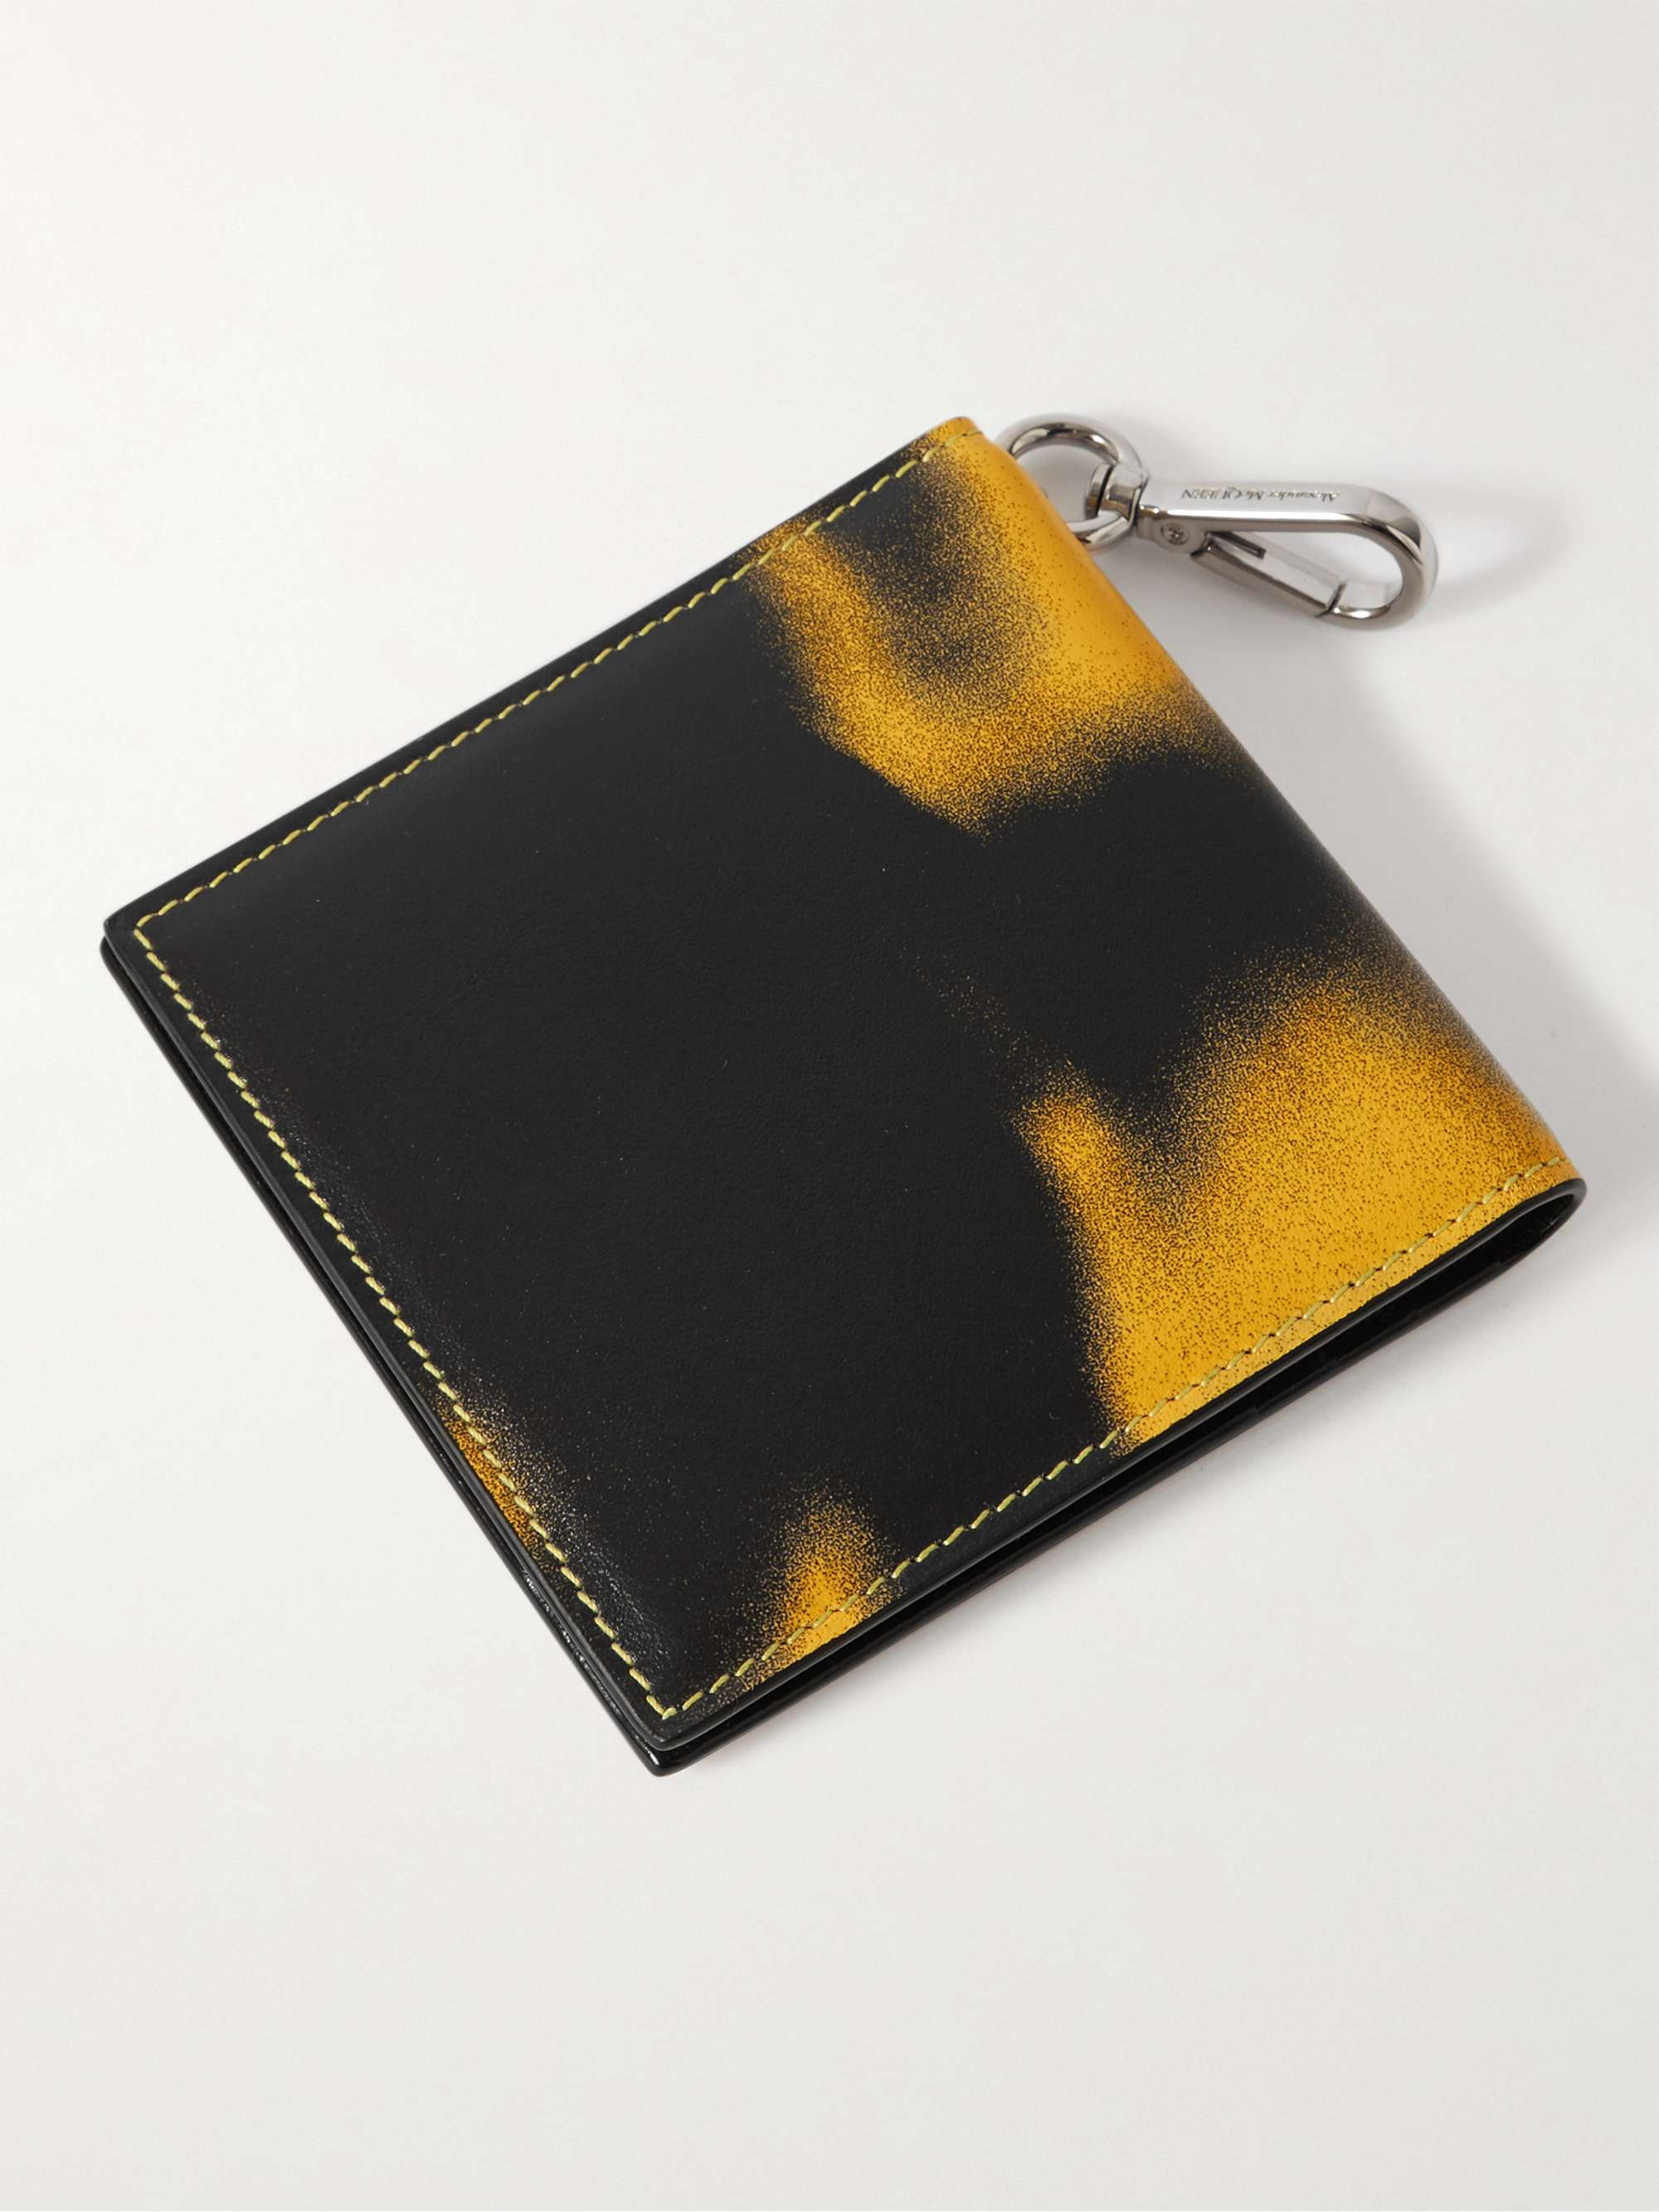 ALEXANDER MCQUEEN Silhouette Printed Leather Billfold Cardholder